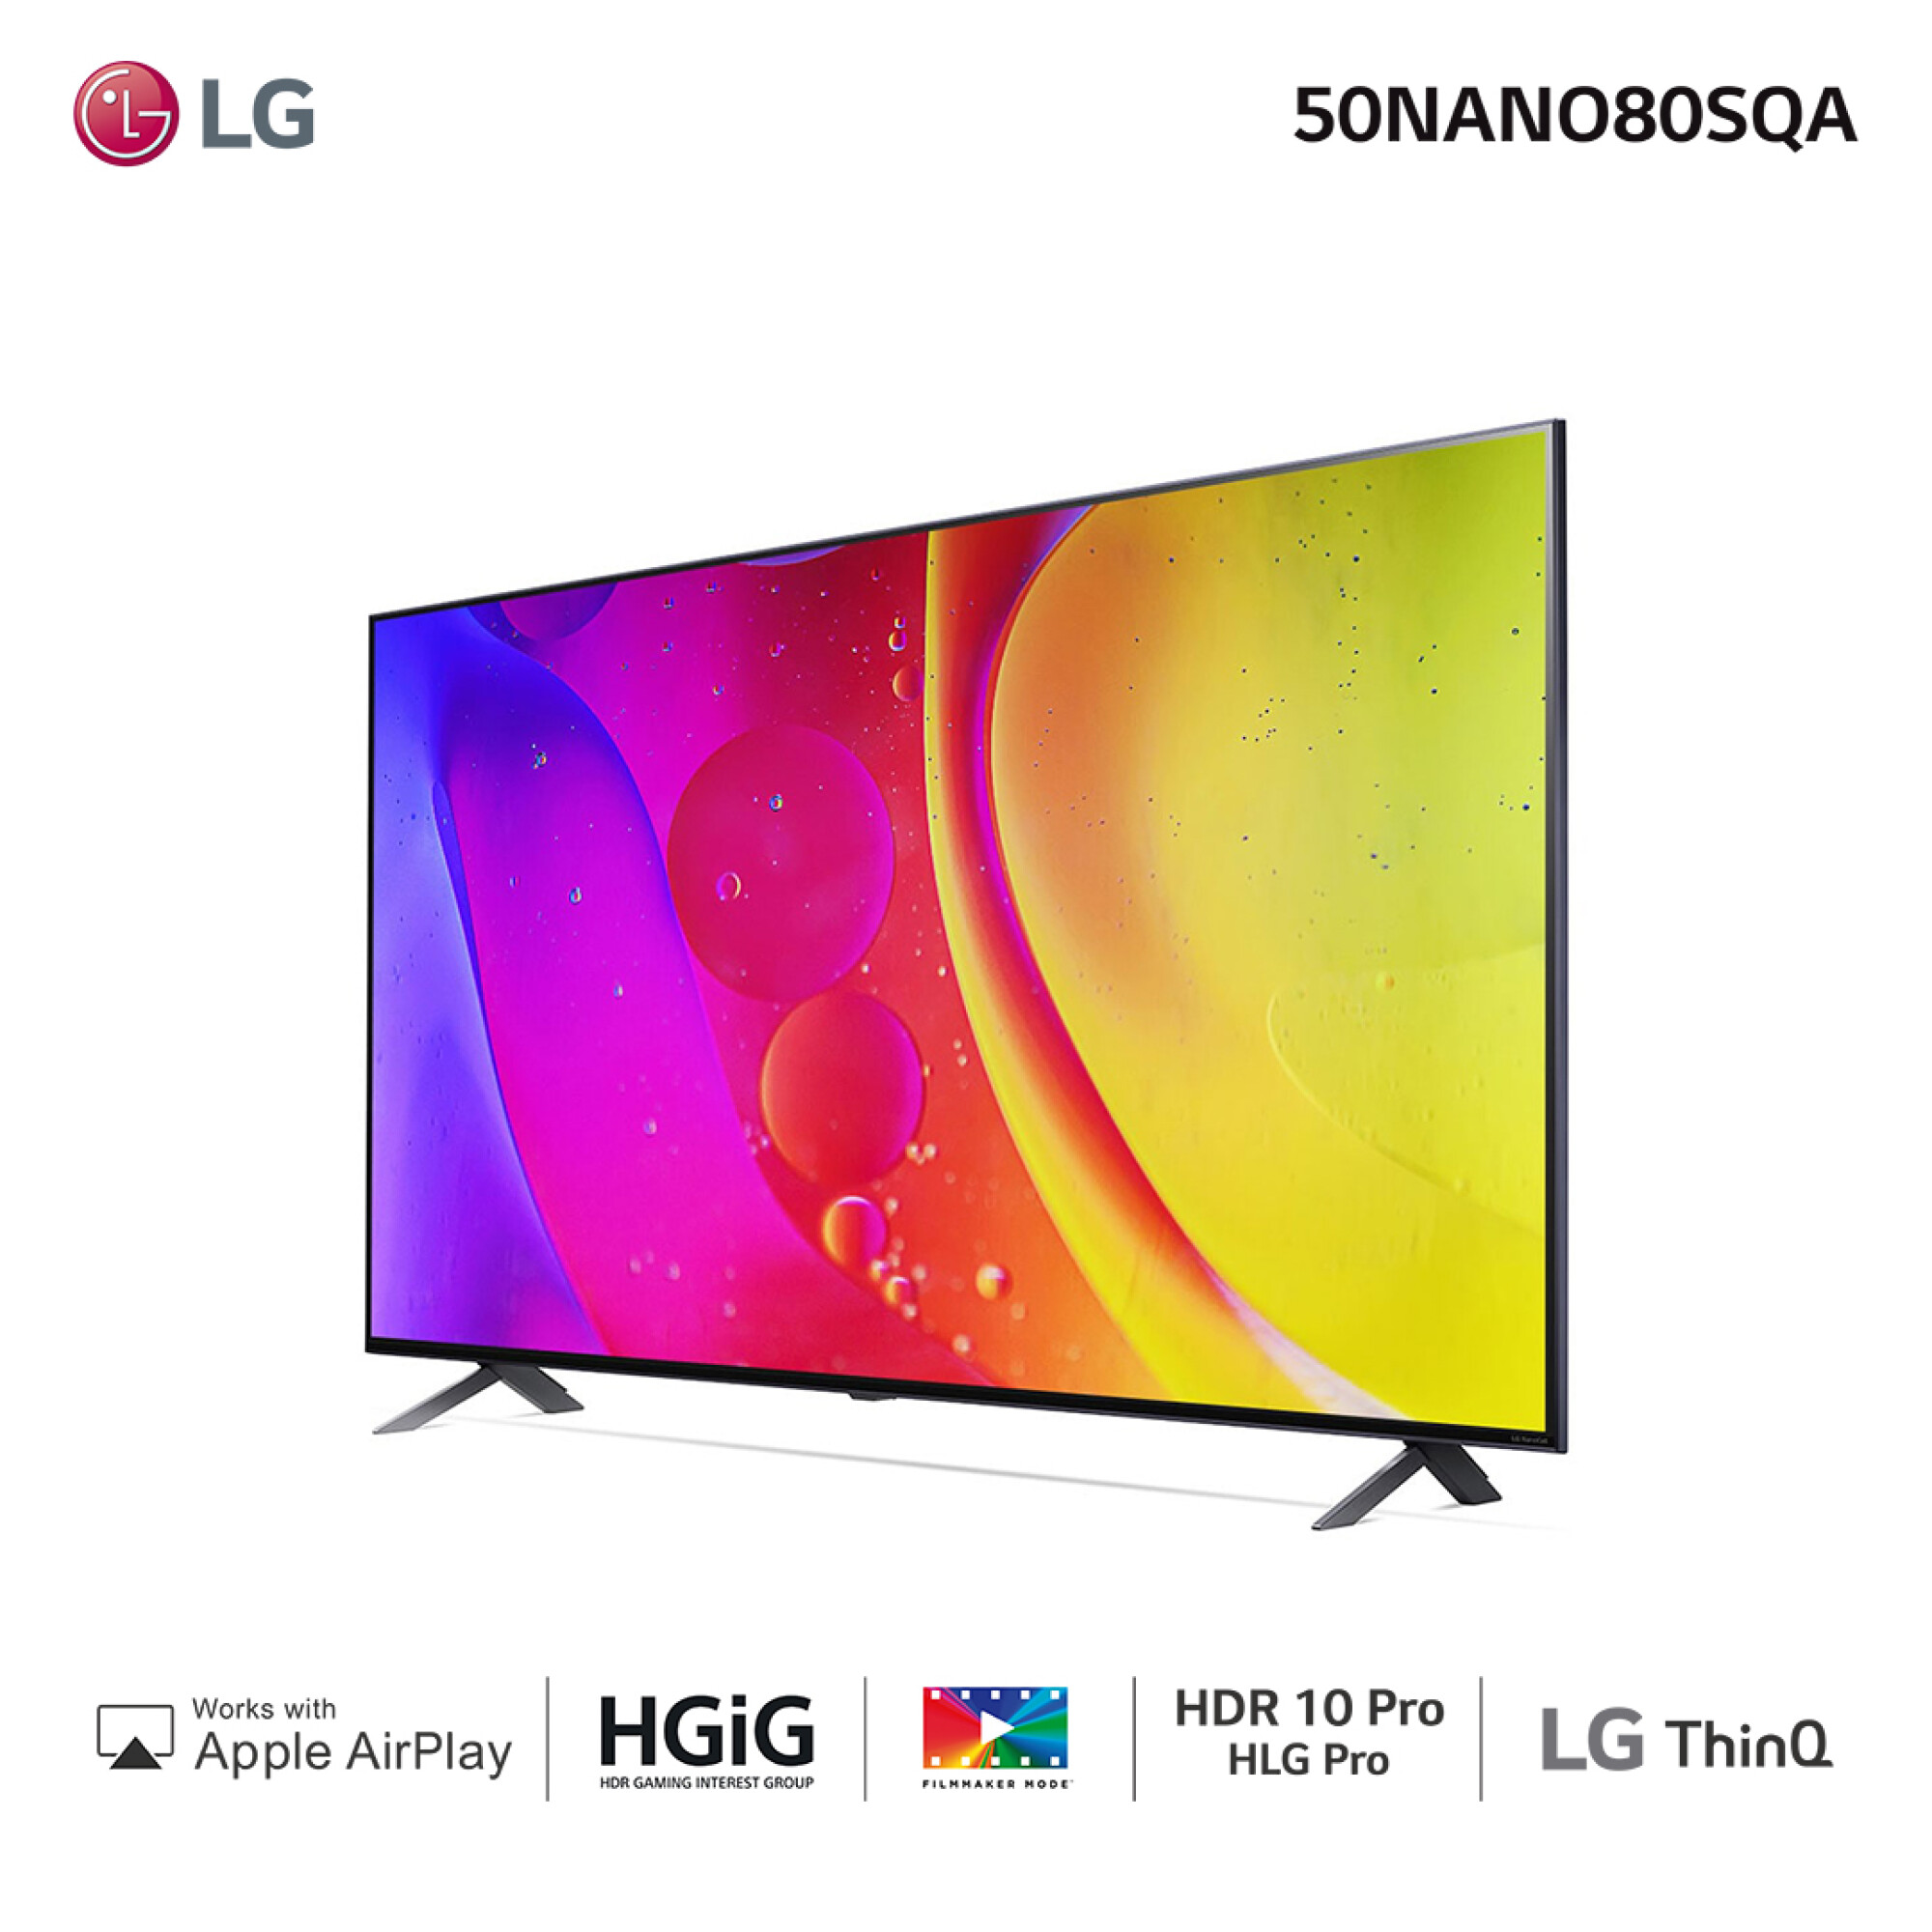 Tv LG de 50 pulgadas NanoCell 4k Ultra HD Smart Tv con